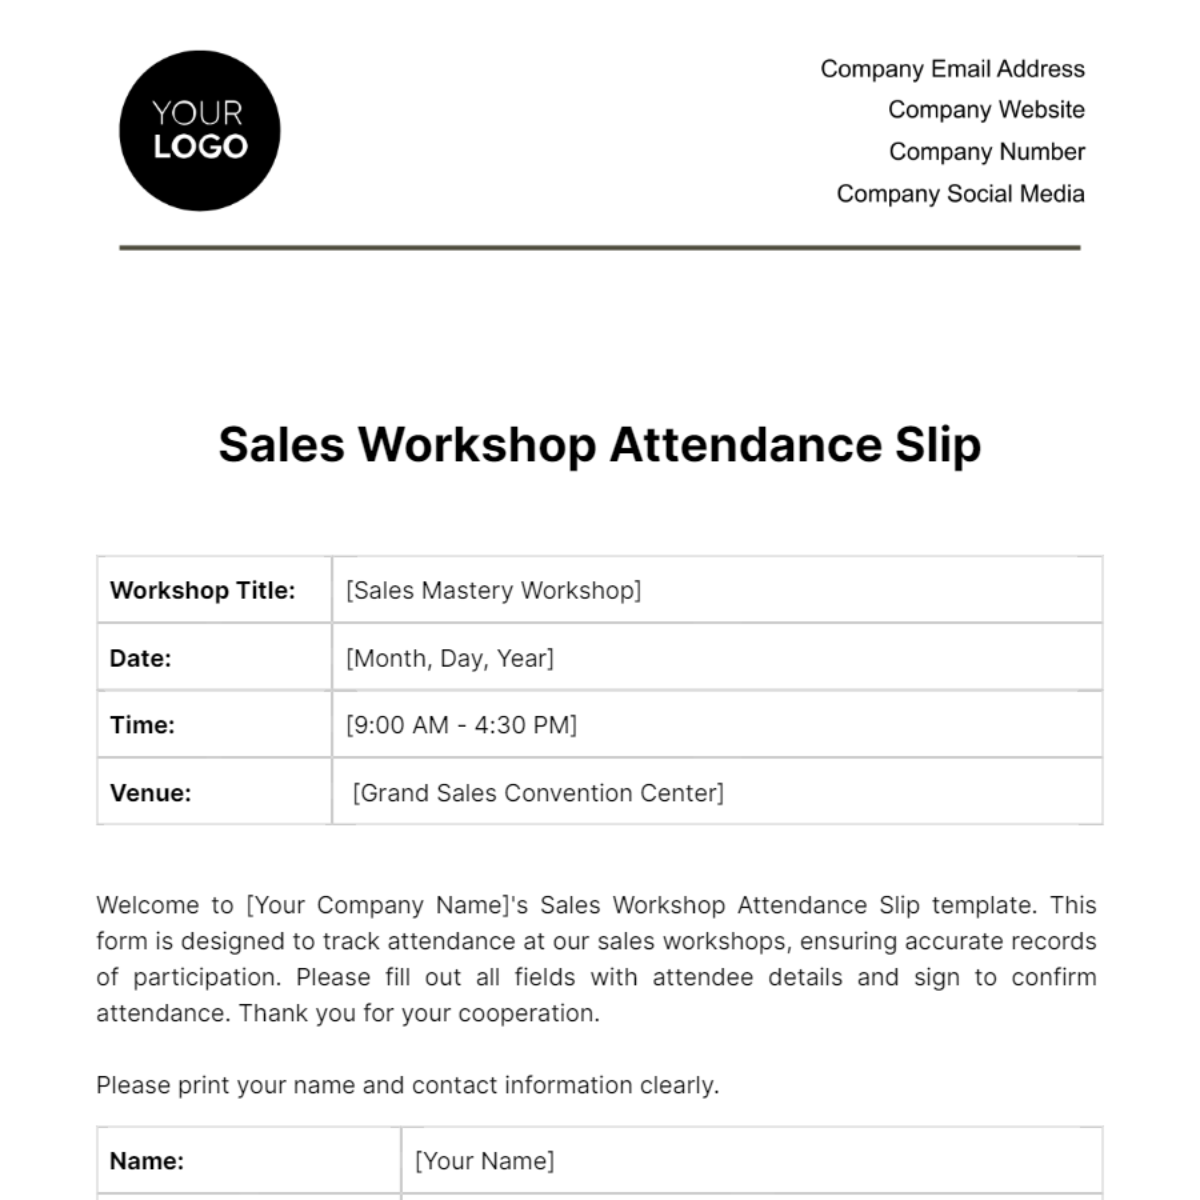 Free Sales Workshop Attendance Slip Template